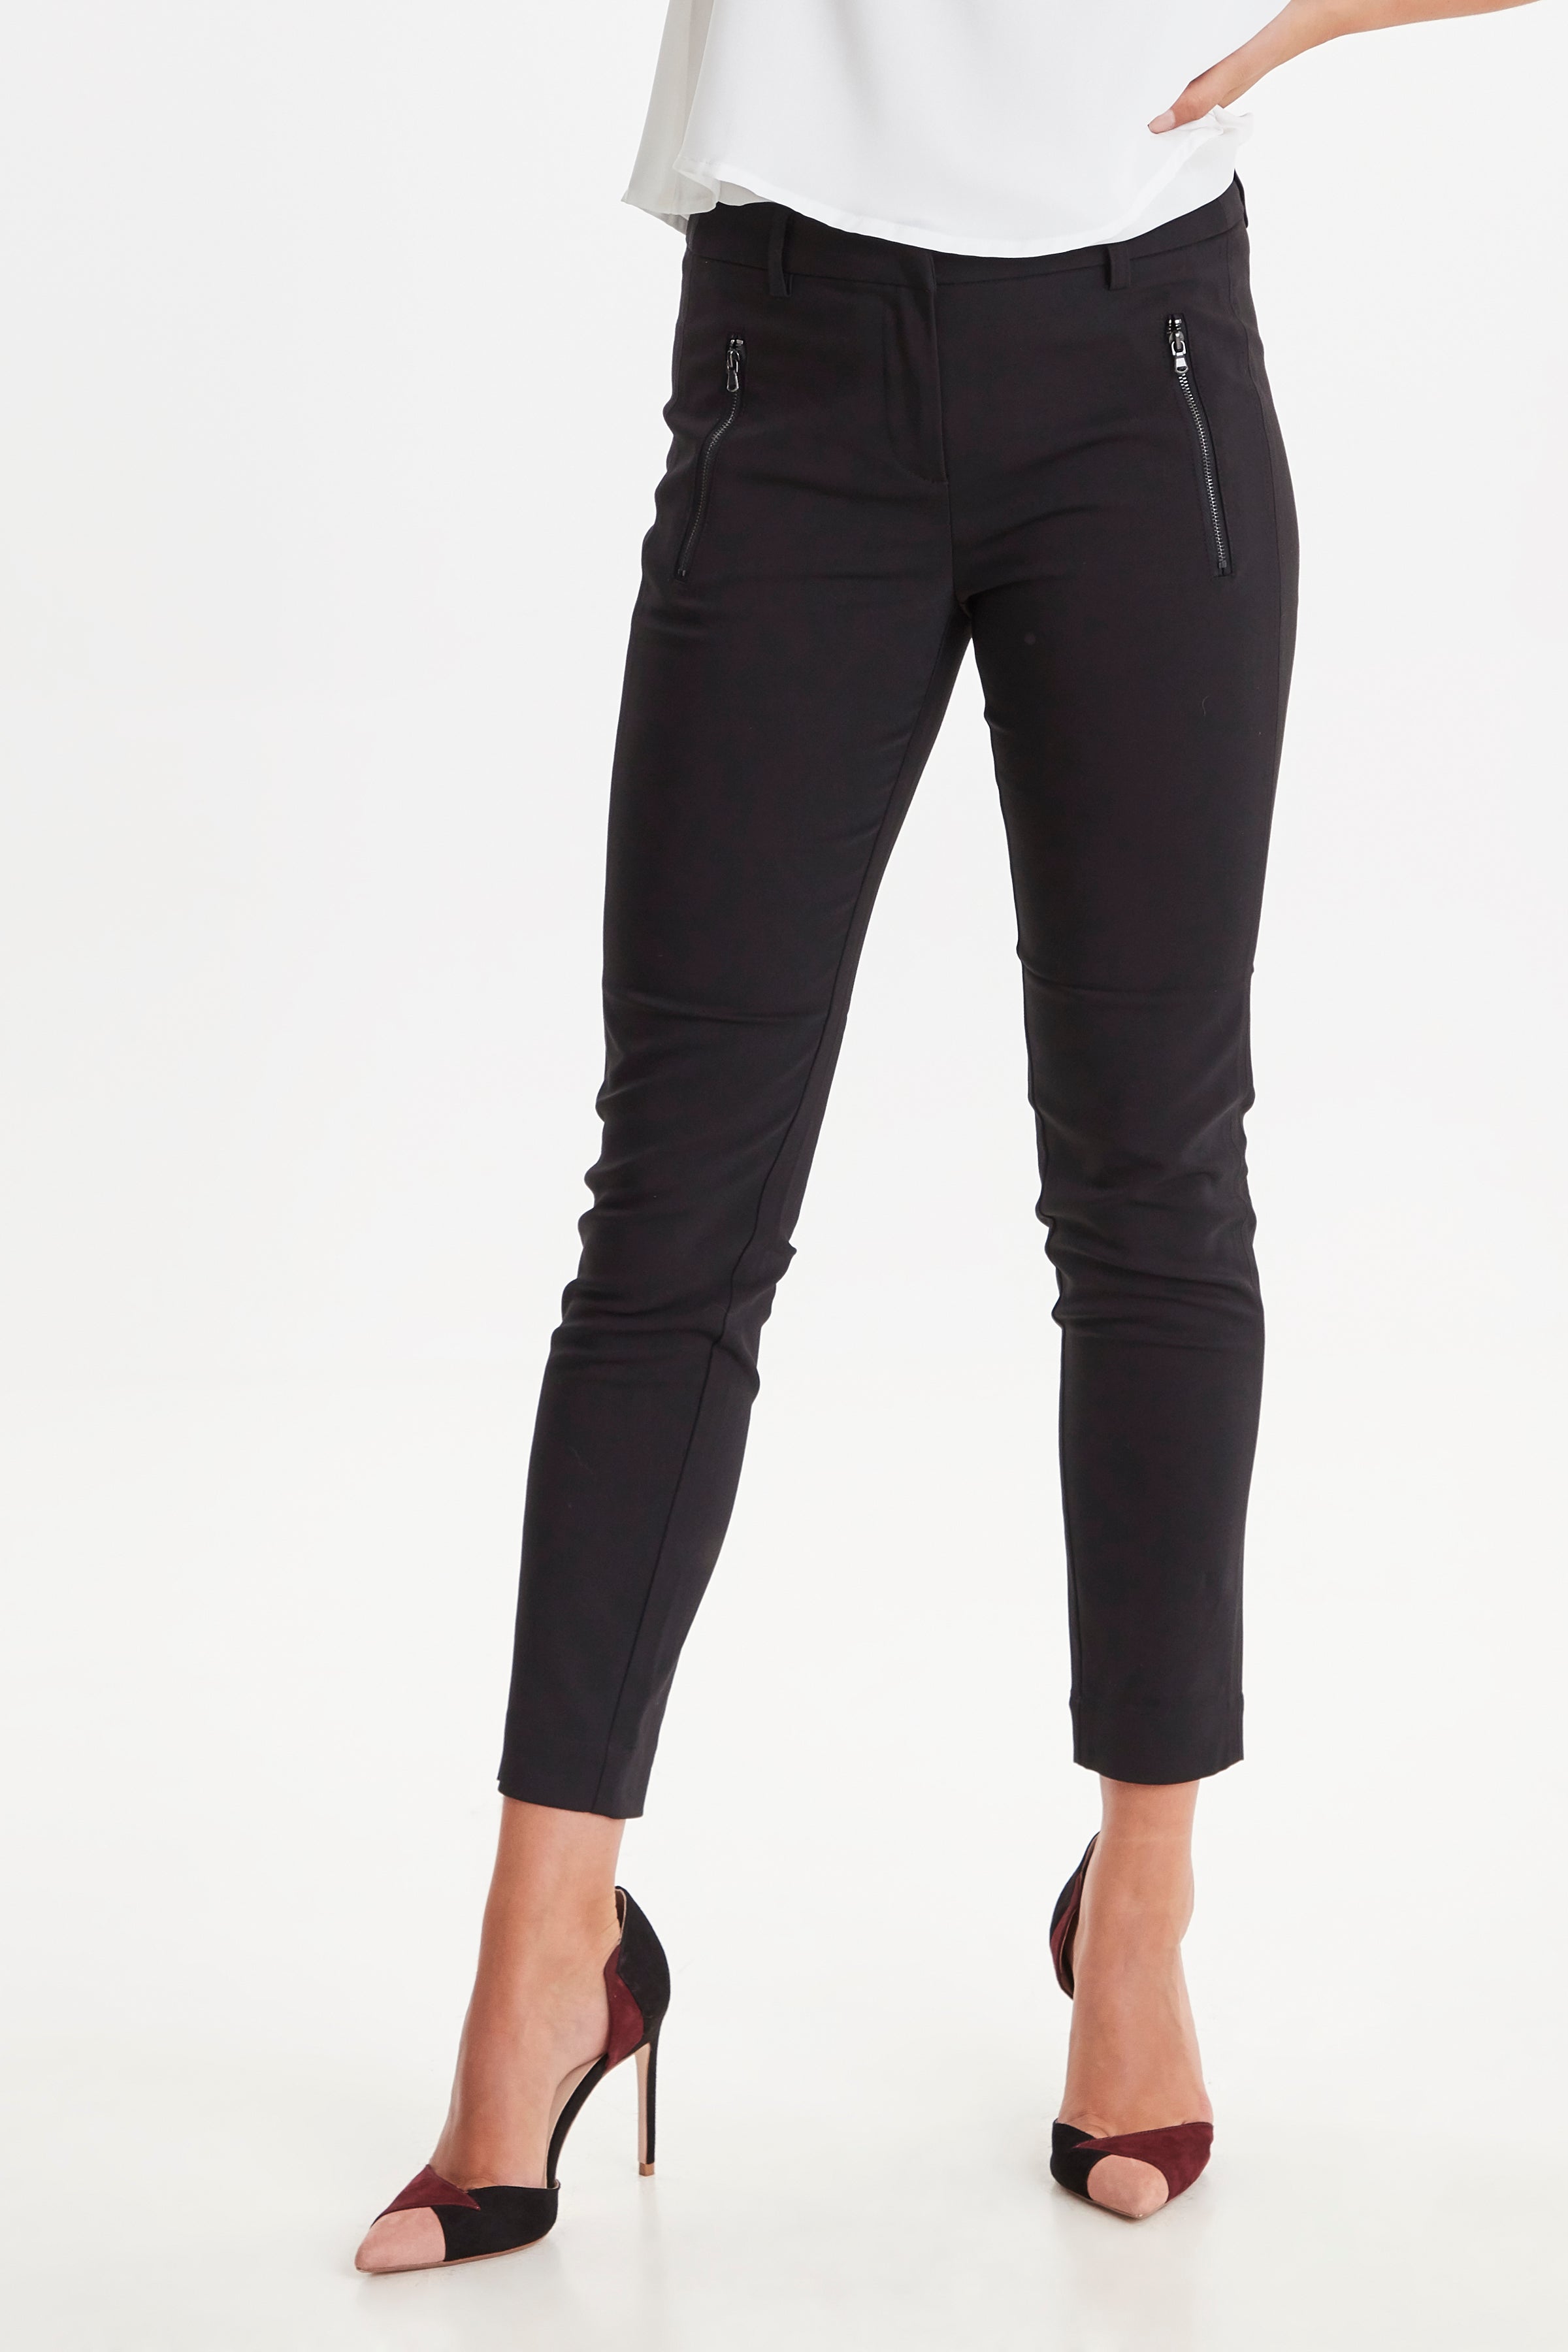 Fransa Zapant Style – Black Boutique Trousers, 67 20603400 Cigarette Ruby